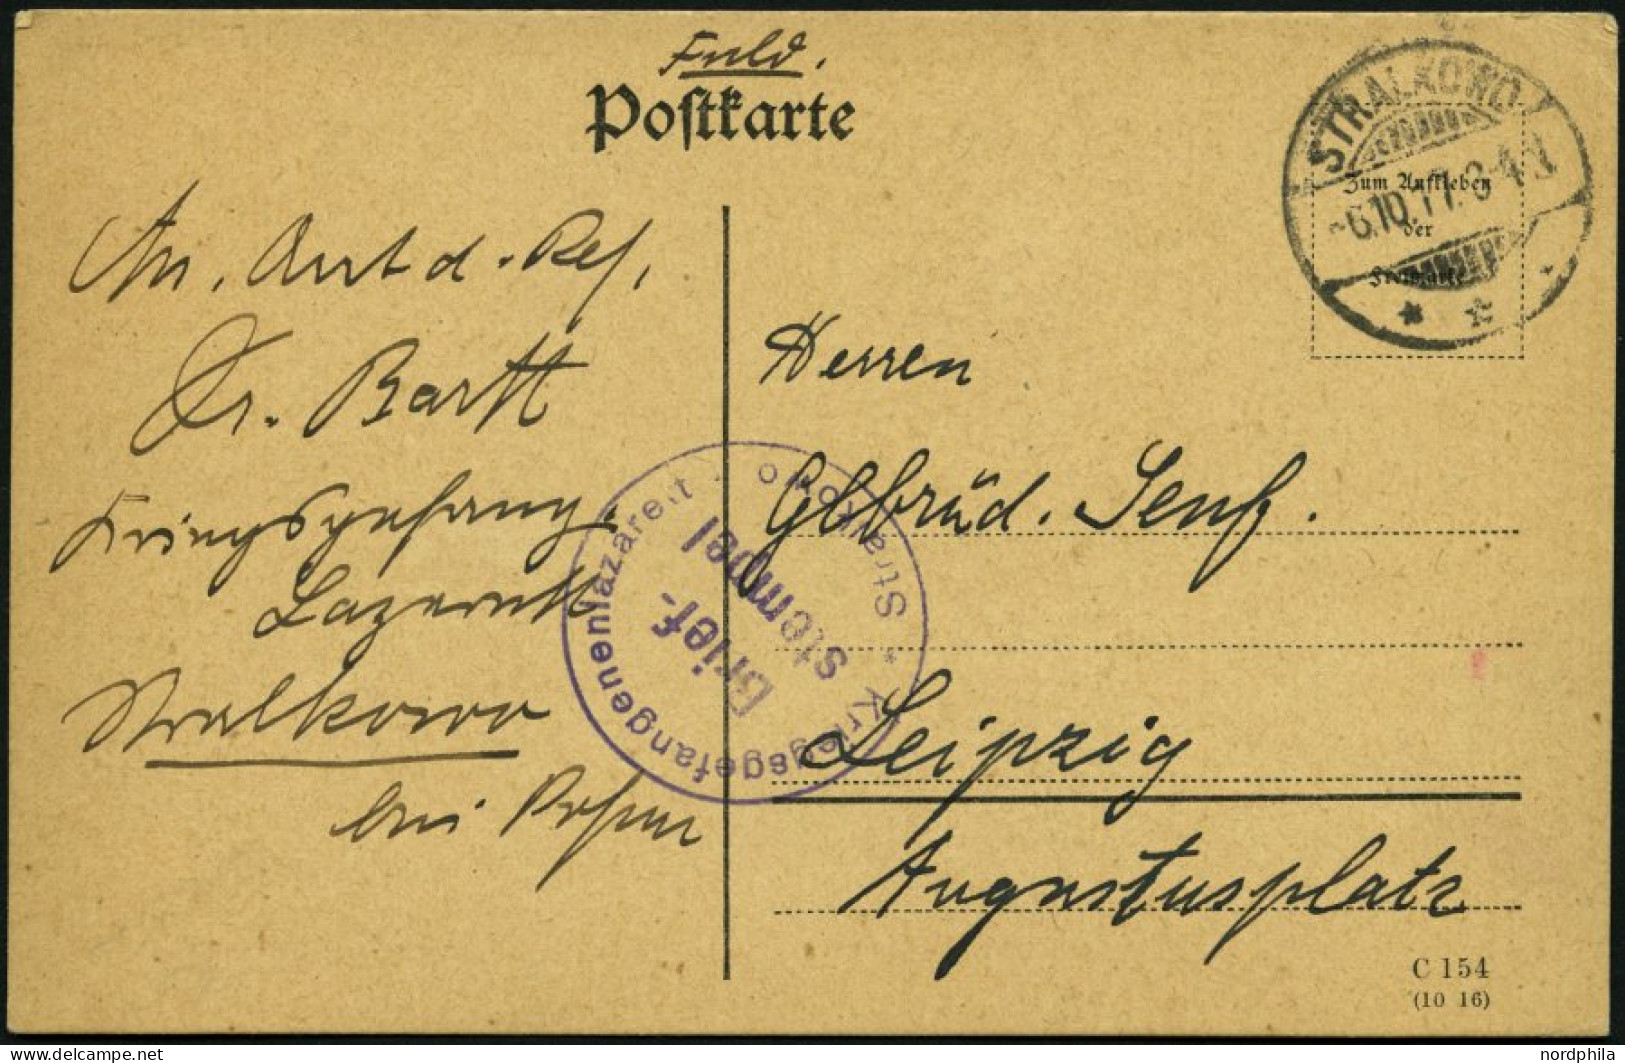 FELDPOST I.WK 1917, Feldpostkarte Mit Violettem K1 KRIEGSGEFANGENENLAZERETT STRALKOWO Nach Leipzig, Feinst - Lettres & Documents